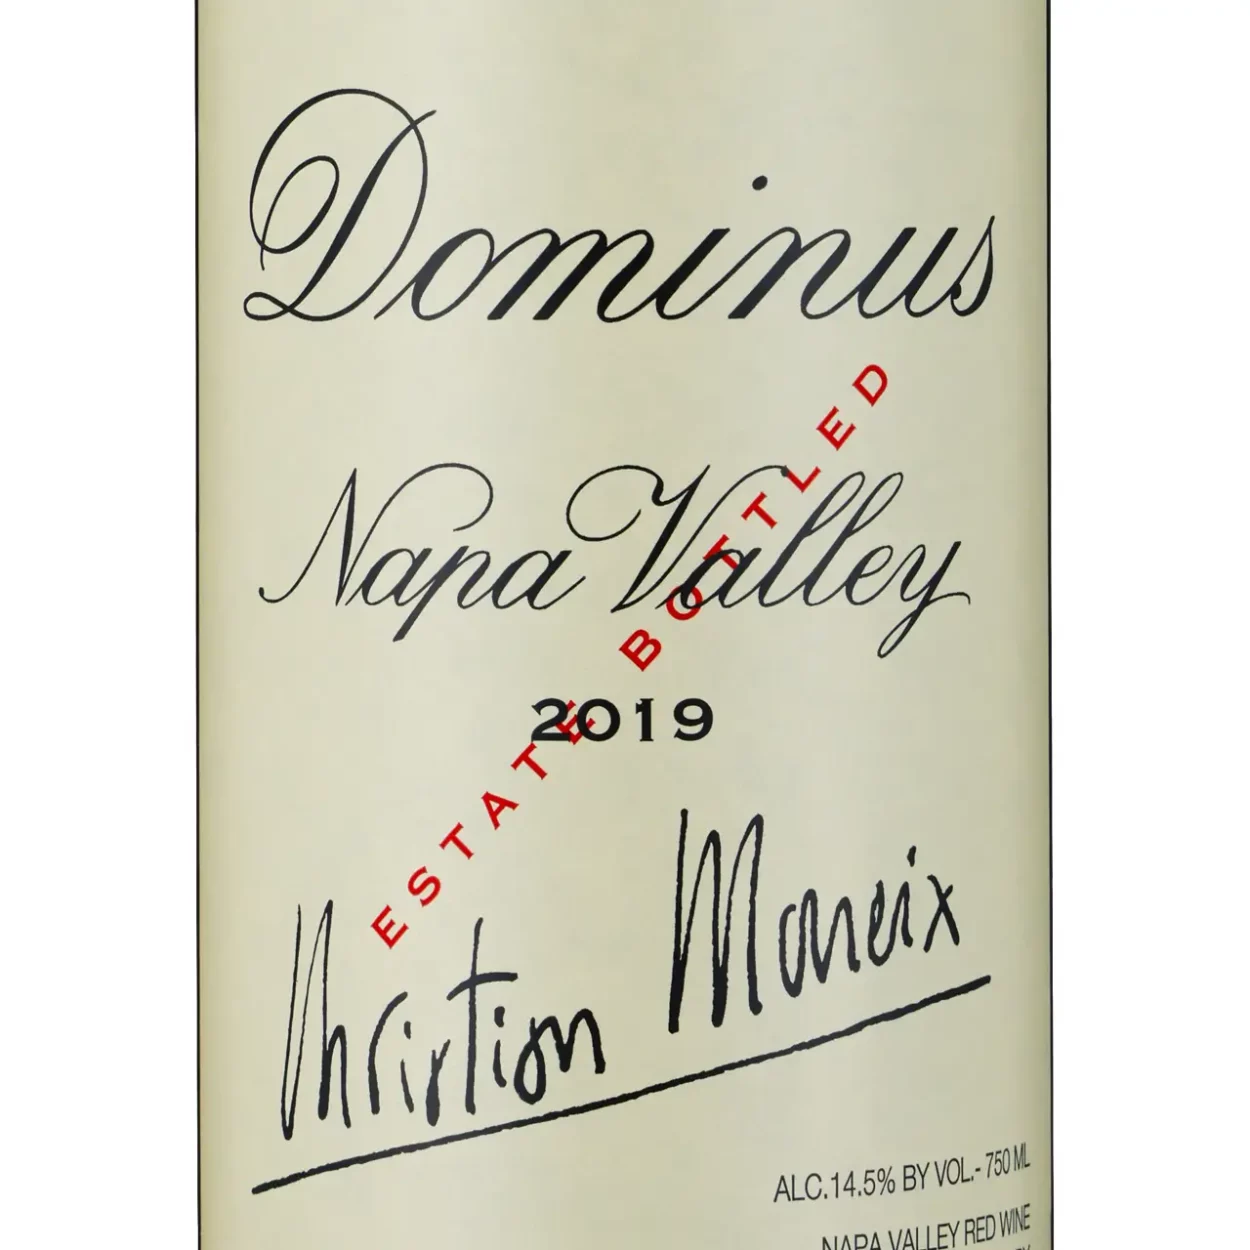 Dominus Estate Napa Valley 2019